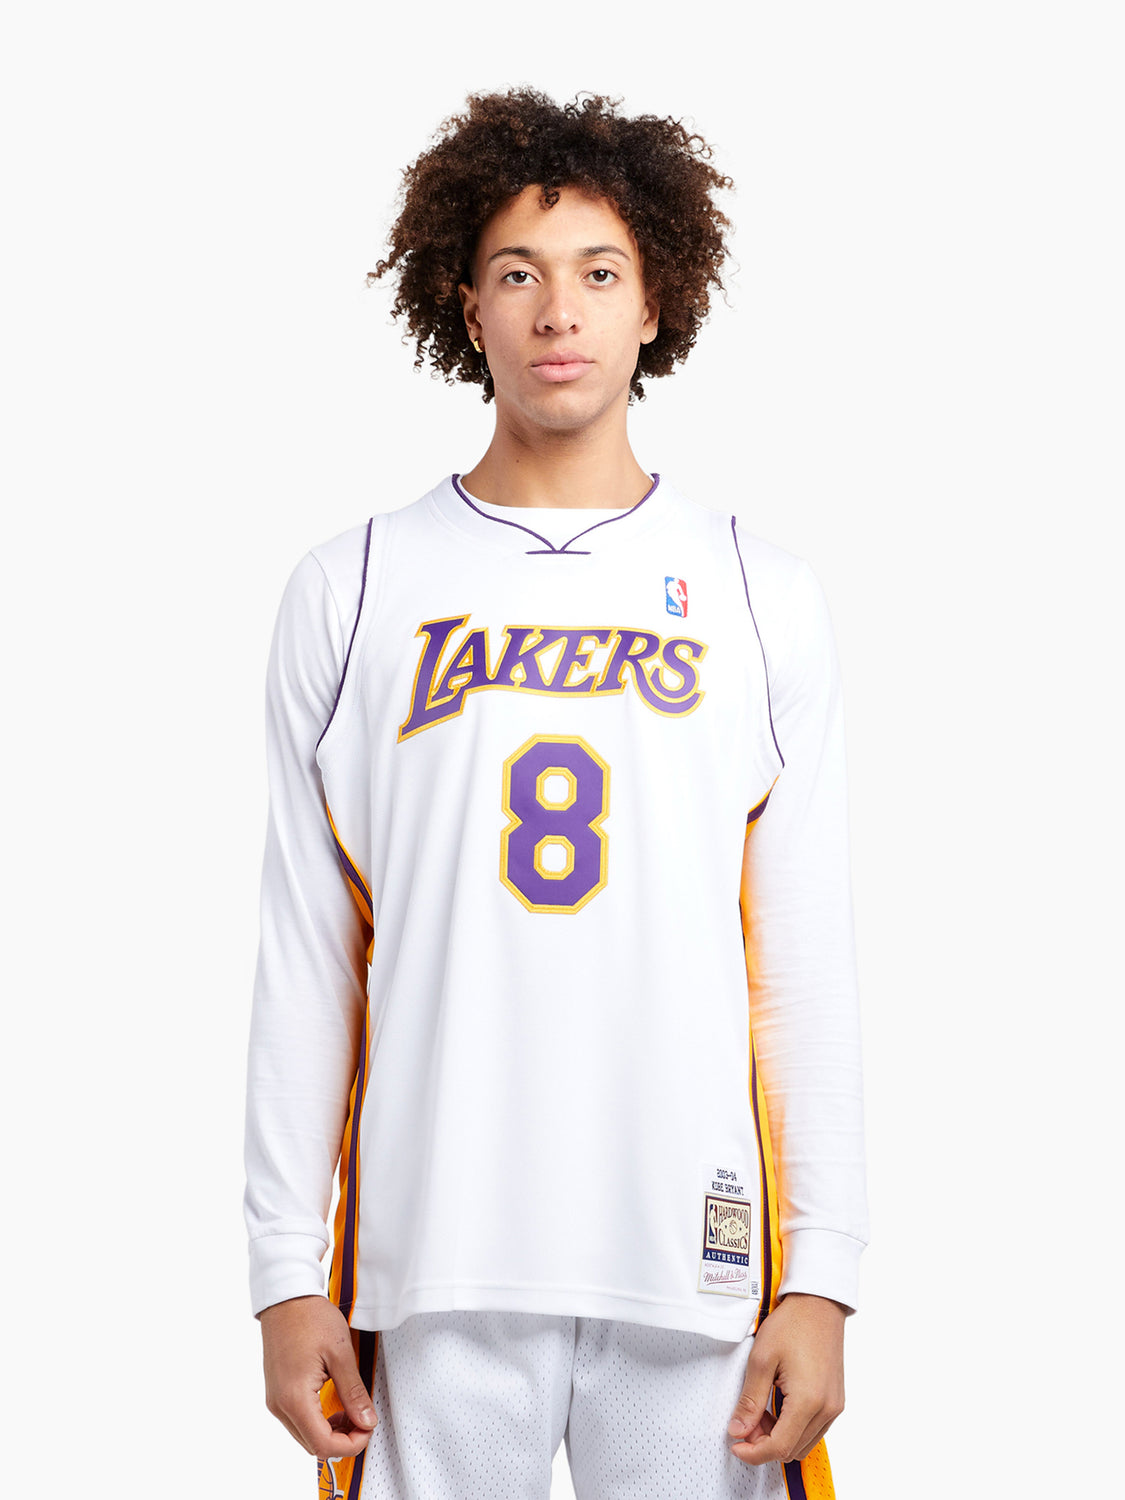 Kobe Bryant #8 Los Angeles Lakers M&Ness Alternate 2003-04 White